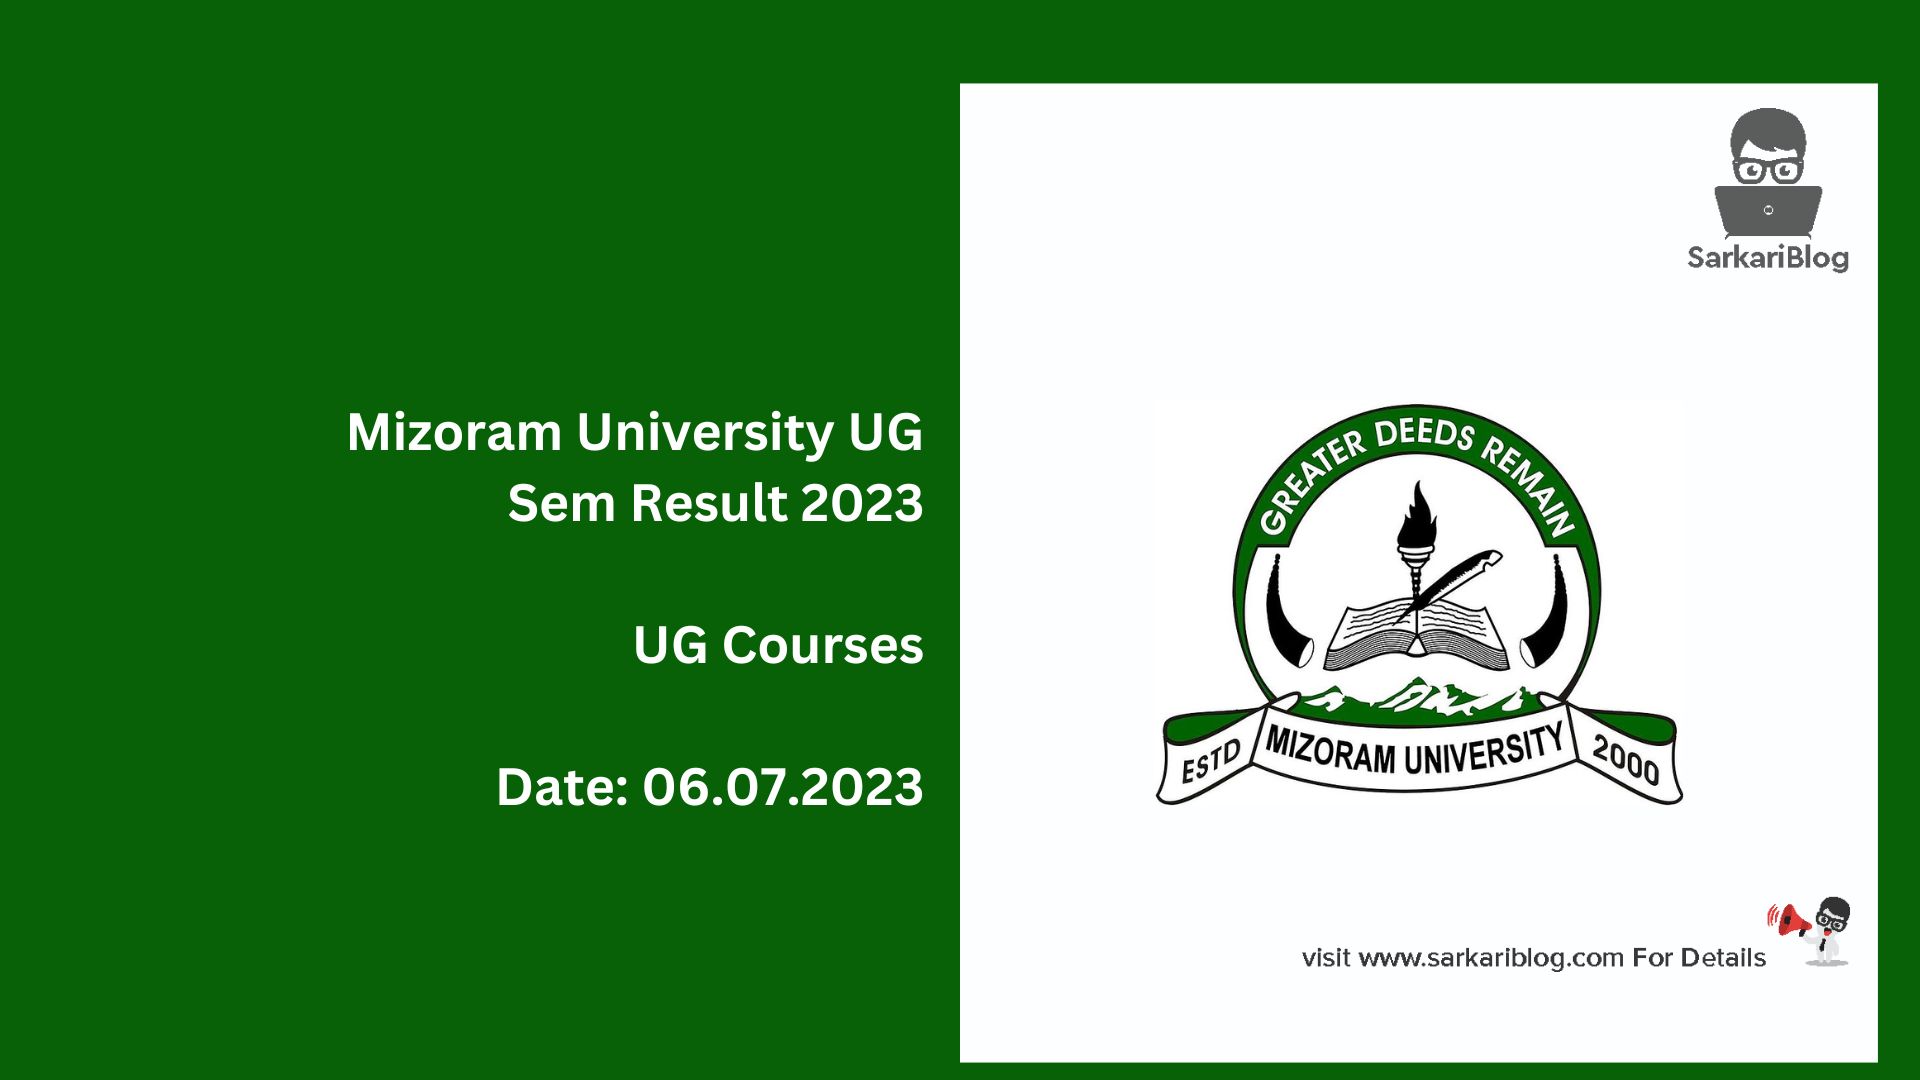 Mizoram University UG Sem Result 2023